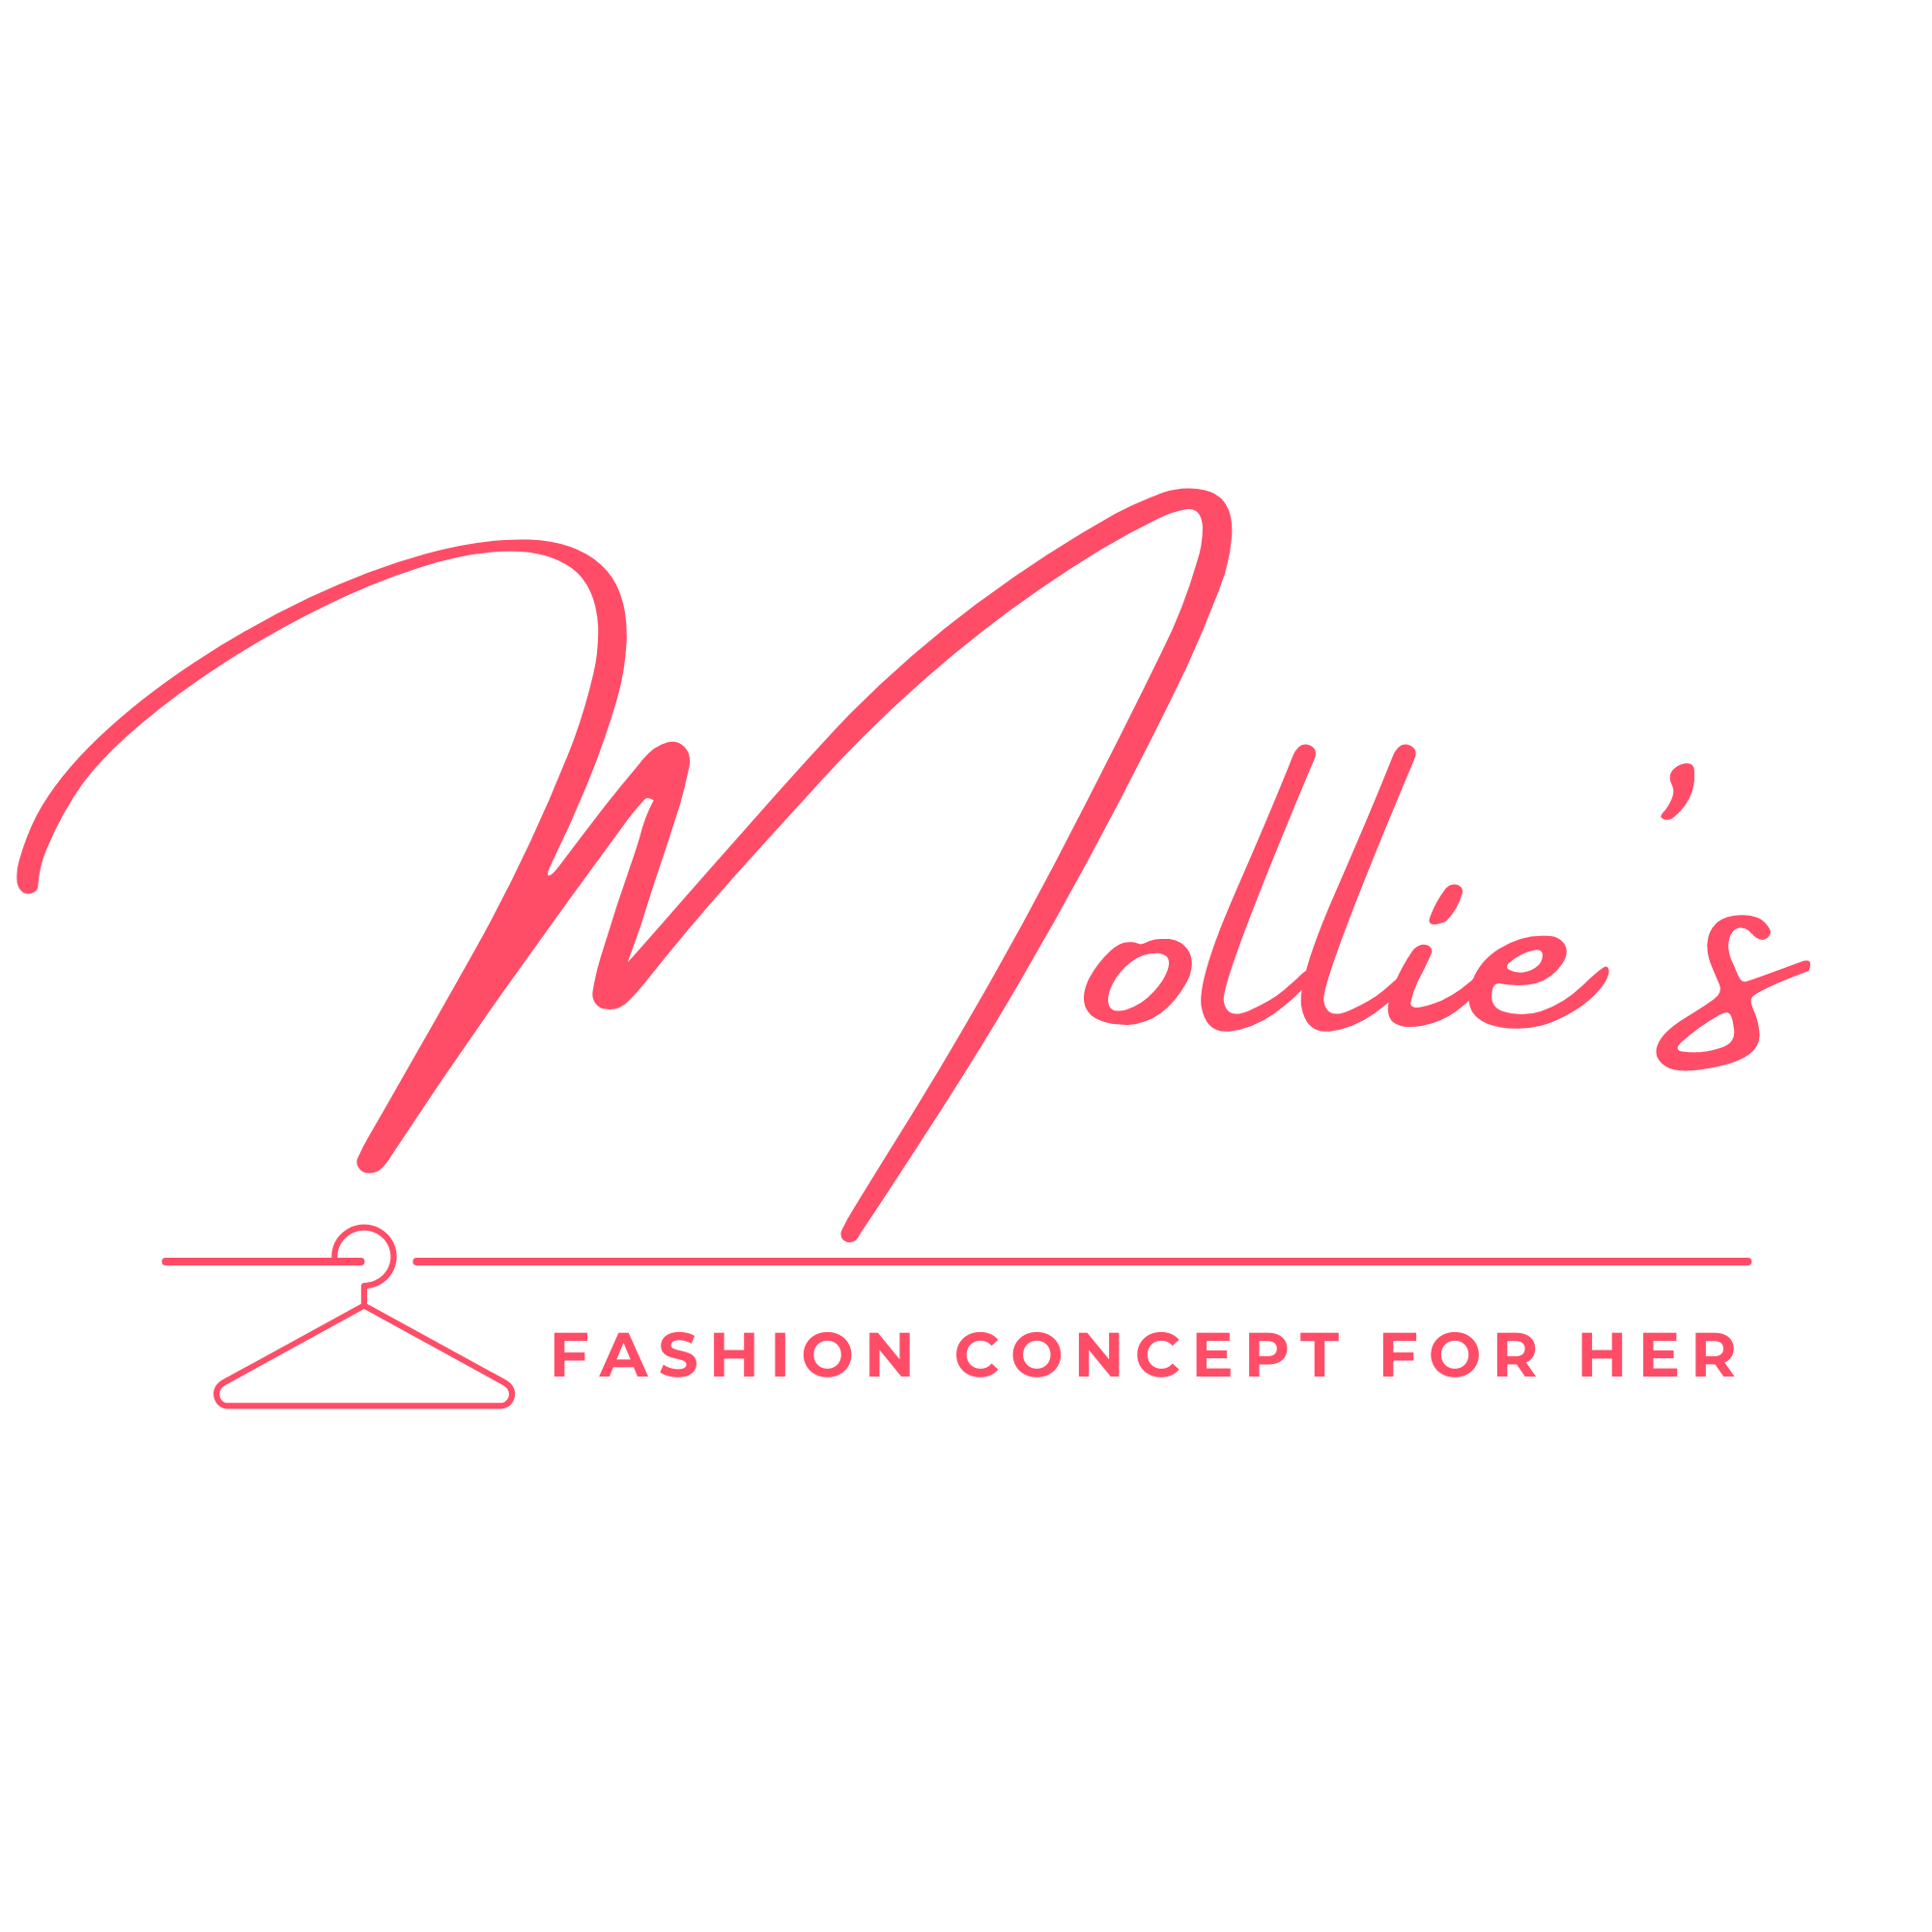 Mollie's